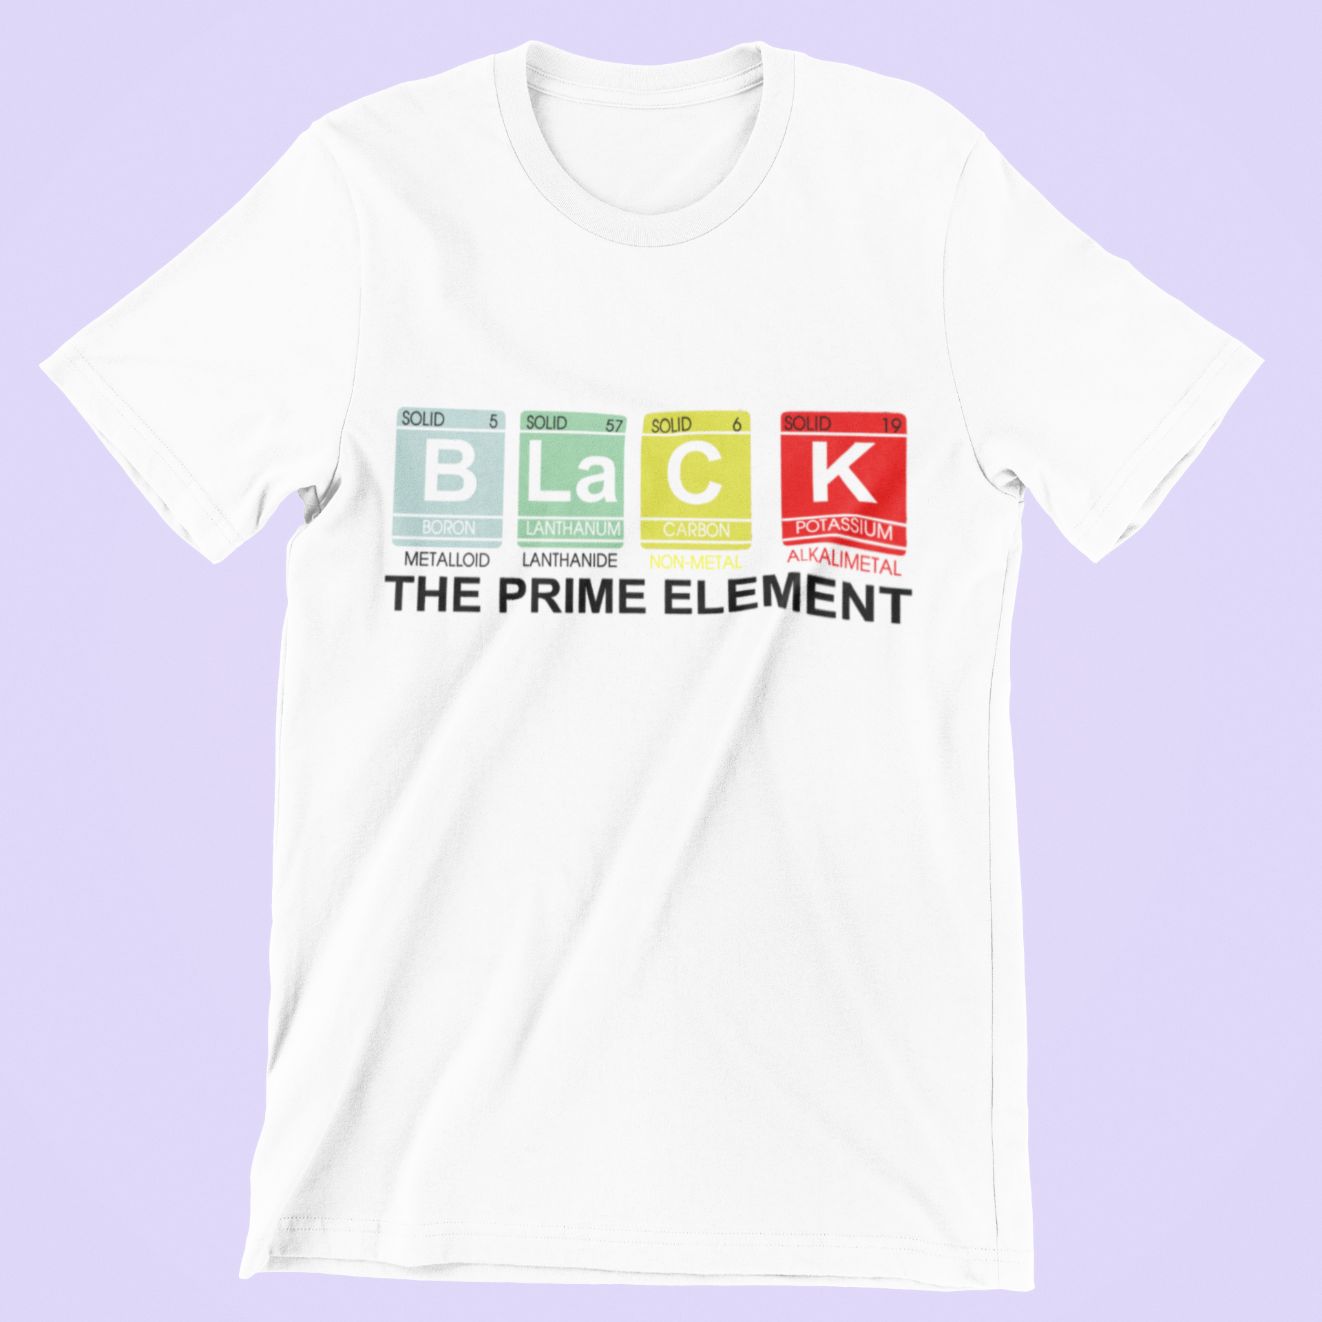 Black The Pride Element T-shirt – Black Month Hot Tee